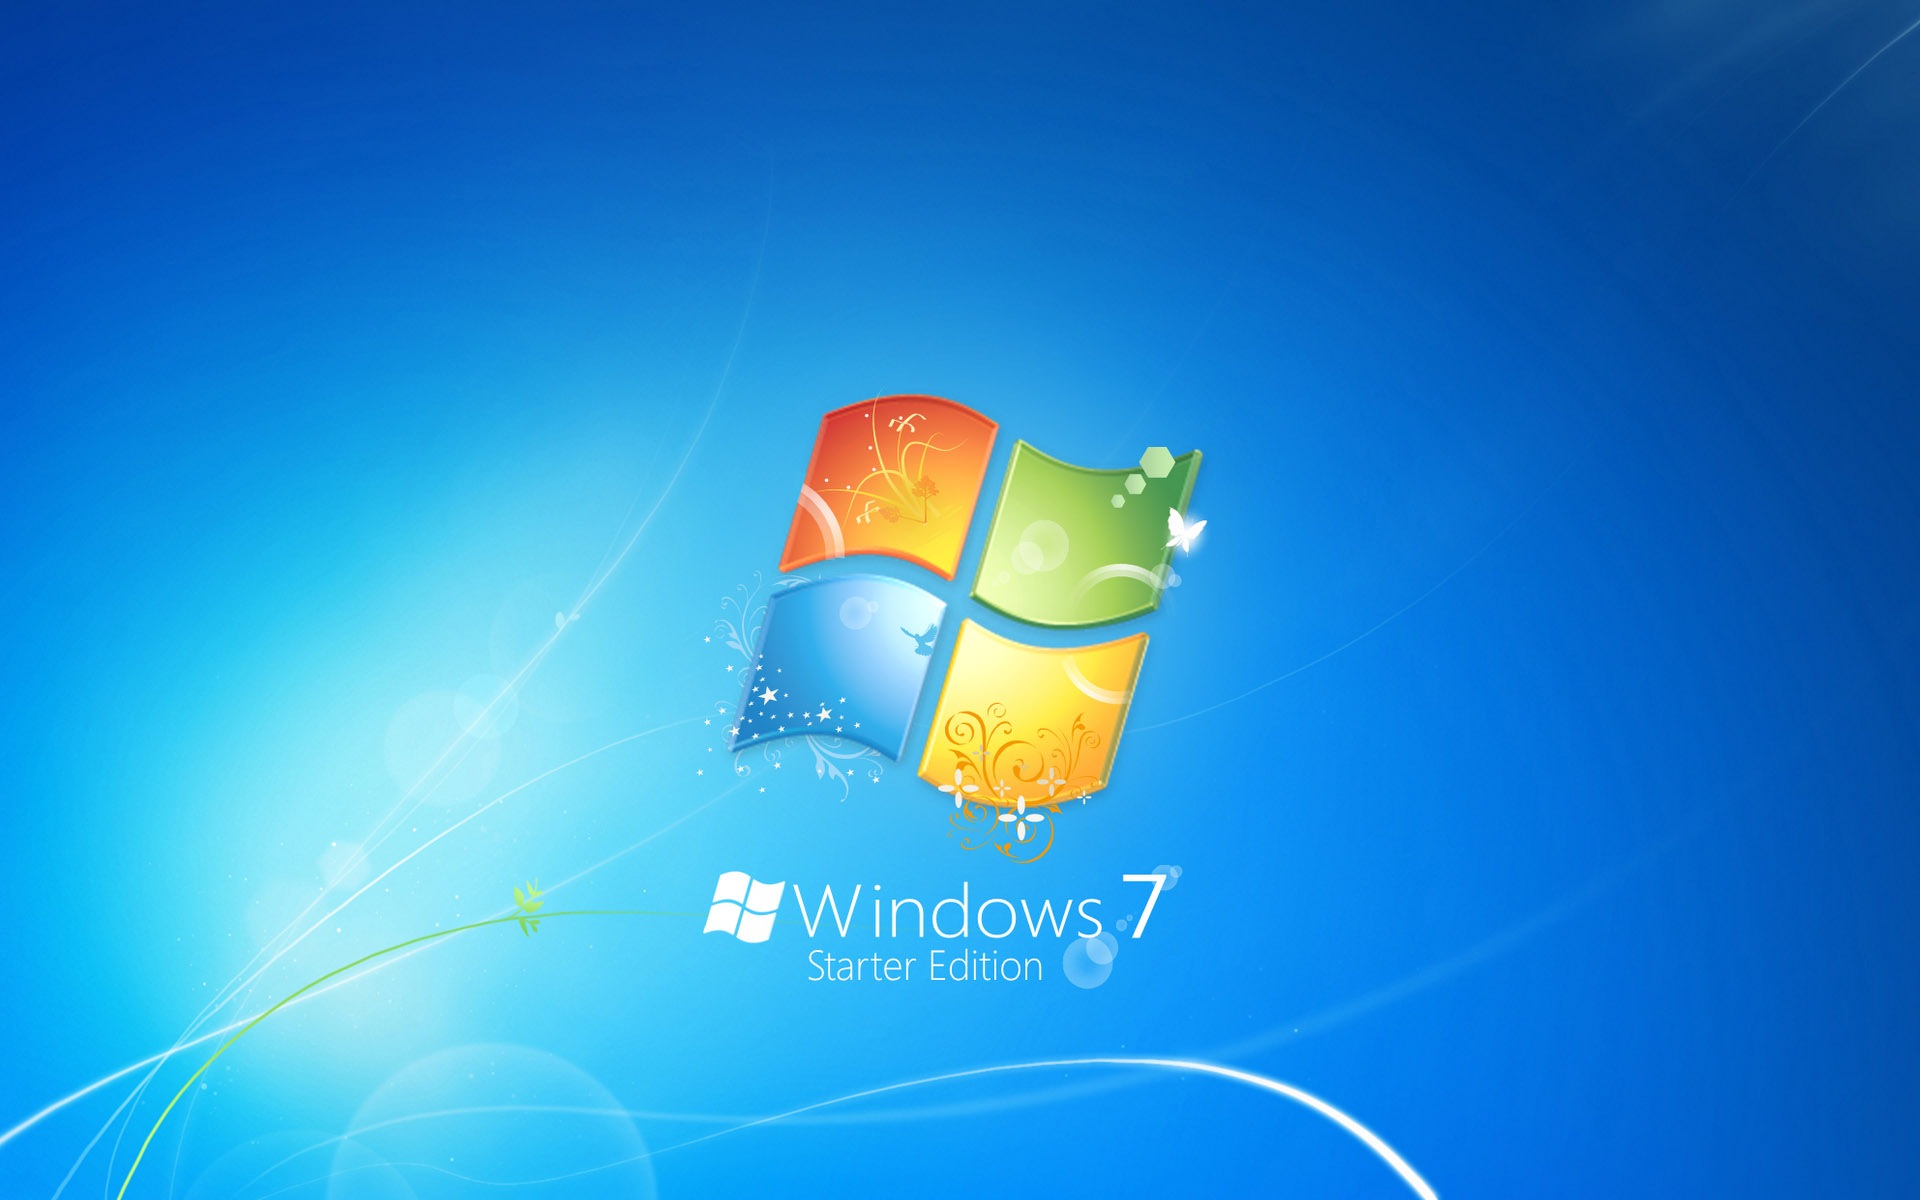 Wallpaper Windows7 theme blue background logo 1920x1200 HD Picture, Image